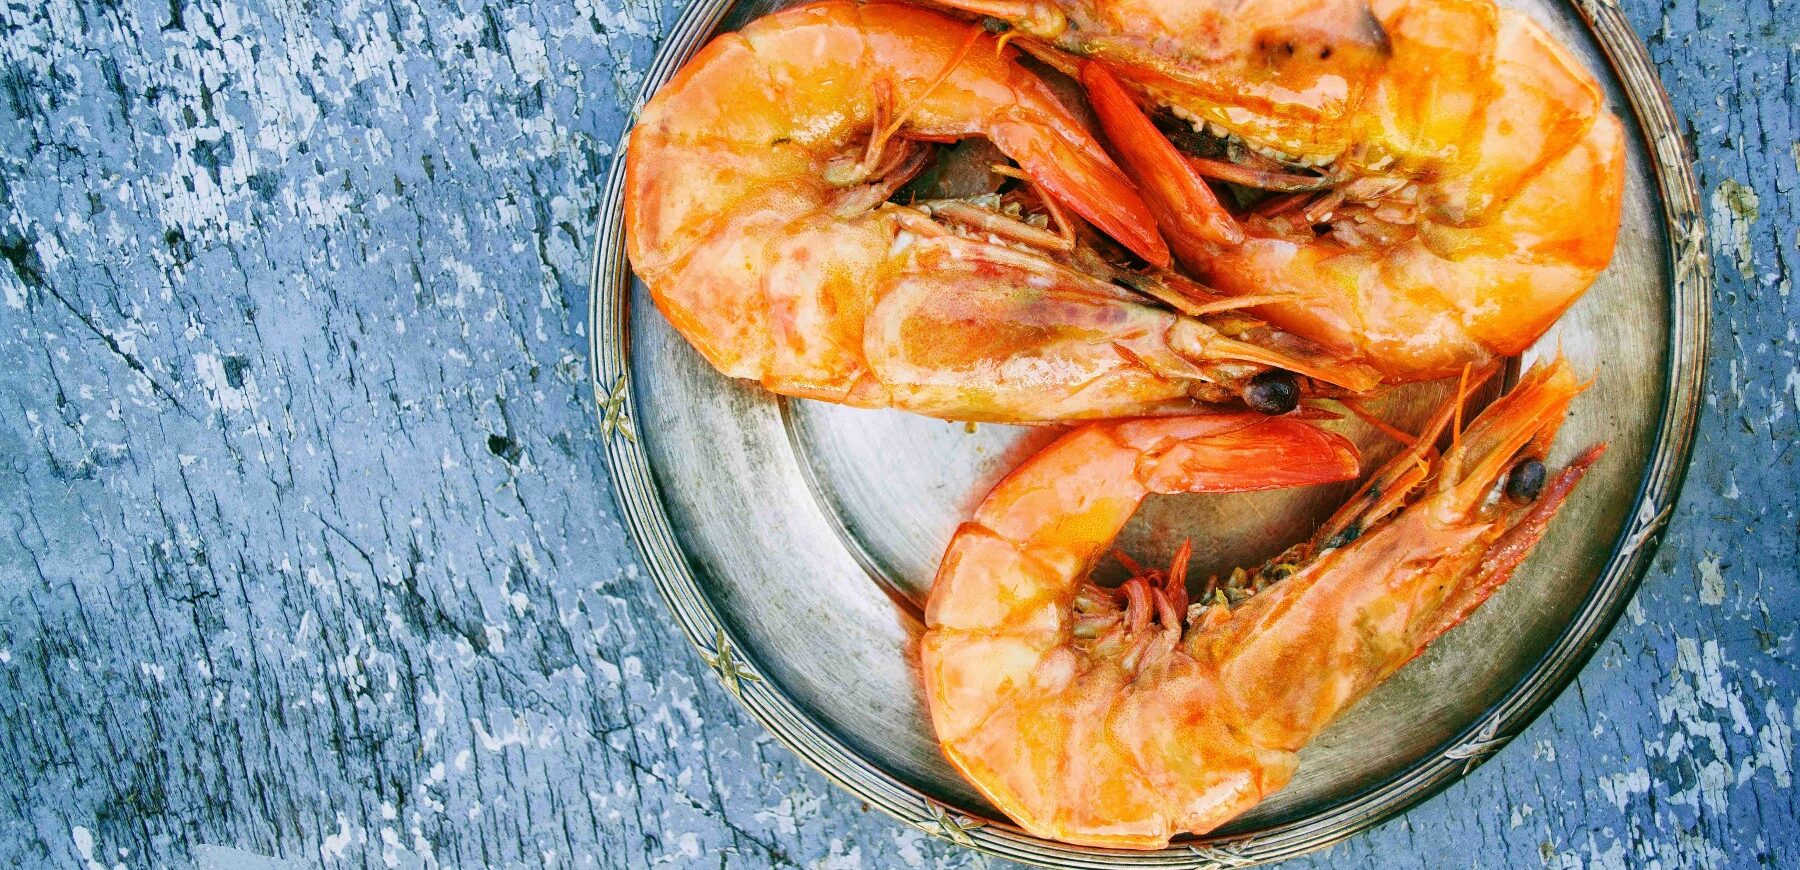 Shrimp - Foods High in Vitamin D